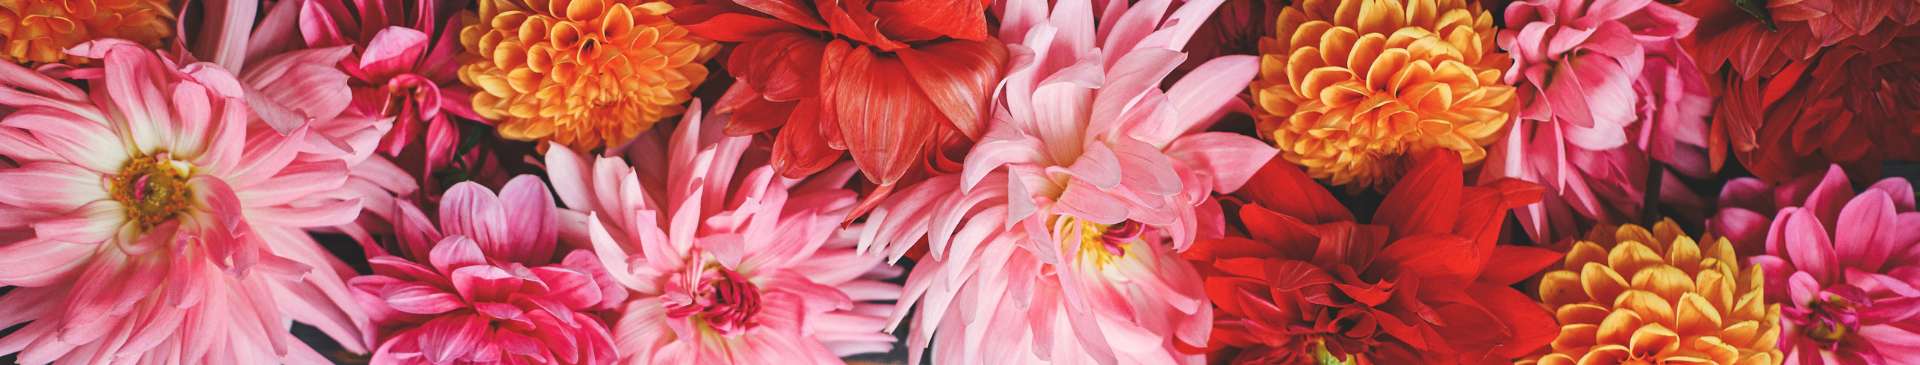 Dahlias: A Floral Obsession